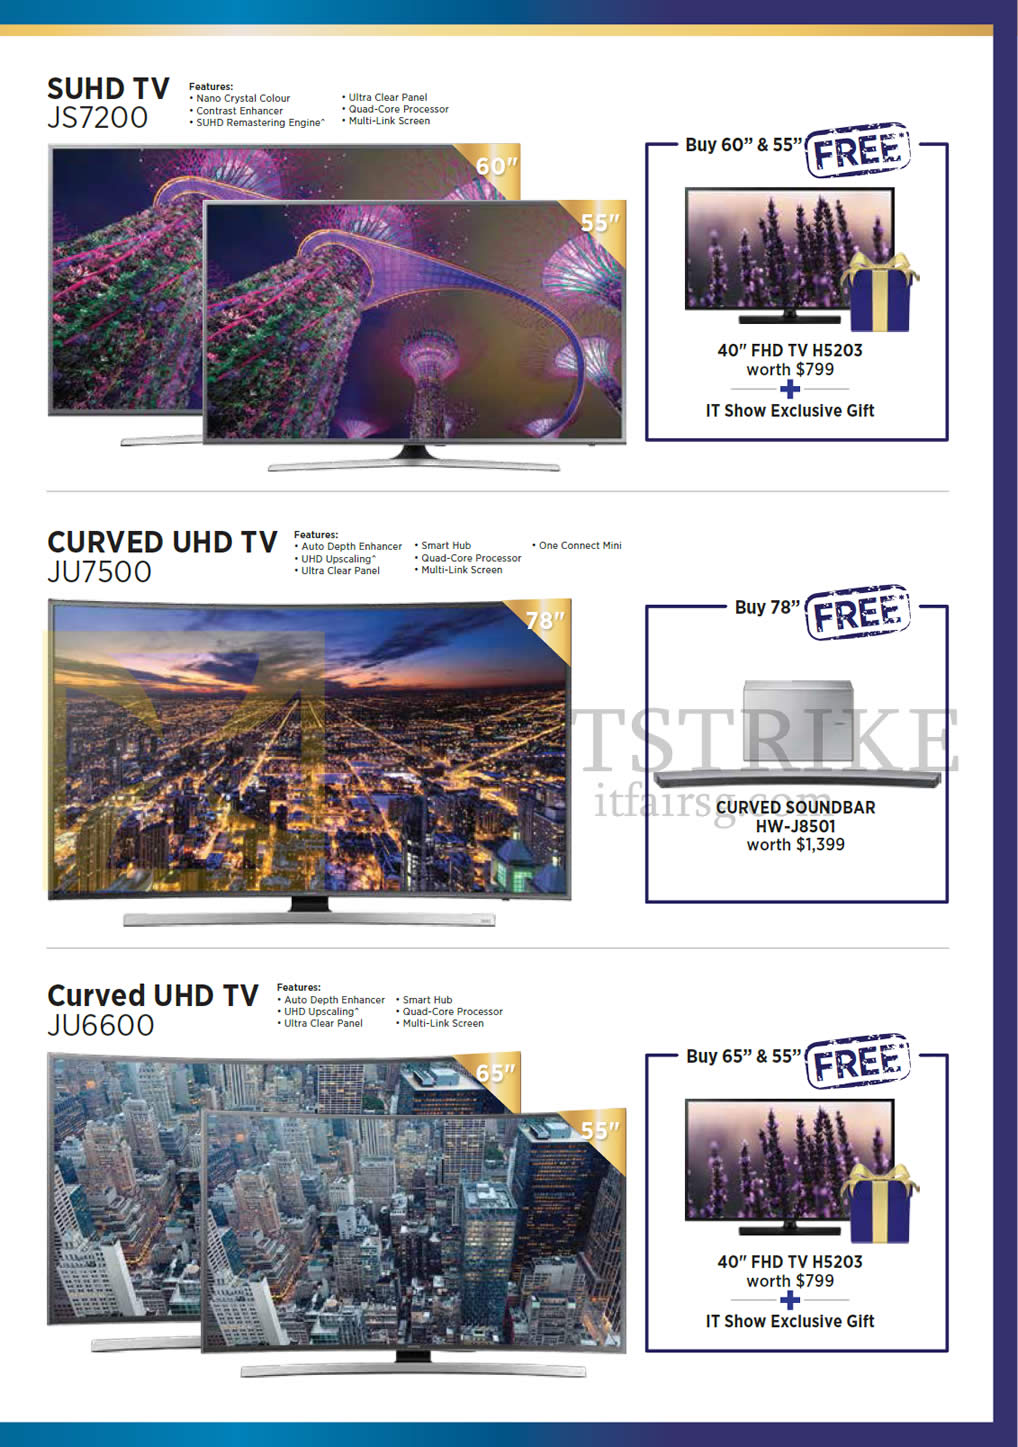 IT SHOW 2016 price list image brochure of Samsung TVs (No Prices) Curved UHD JS7200, JU7500, JU6600